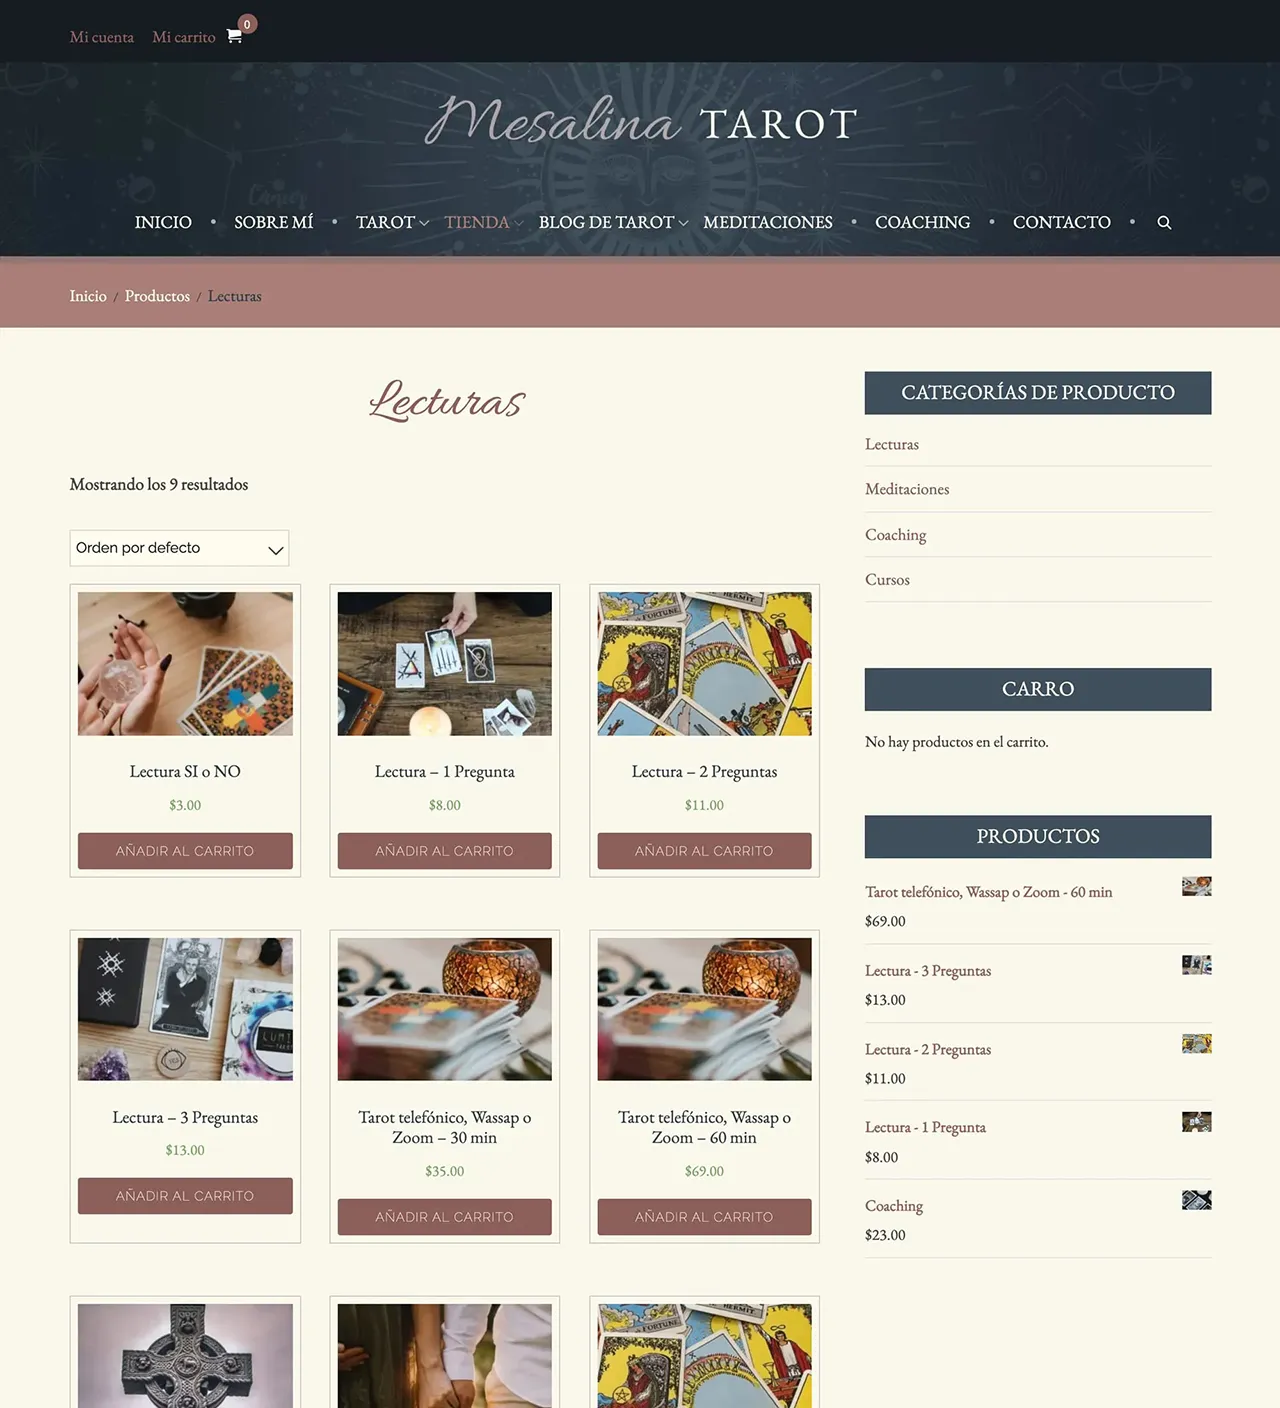 Mesalina Tarot website ecommerce page